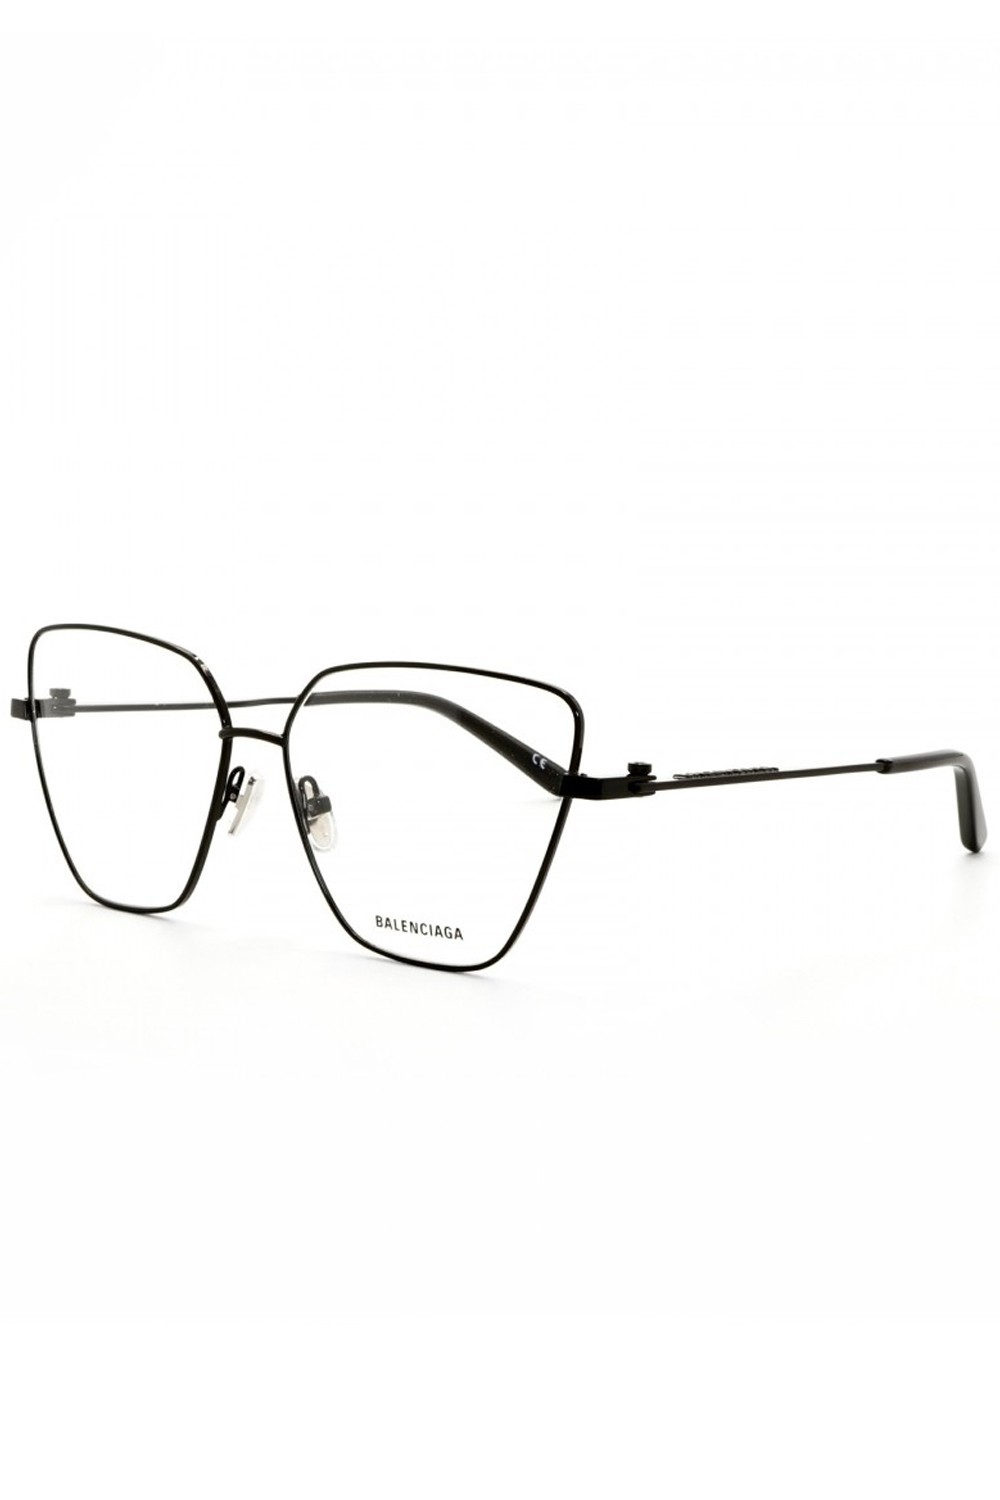 Balenciaga - Occhiali da vista in metallo cat eye per donna nero - BB0170O 003